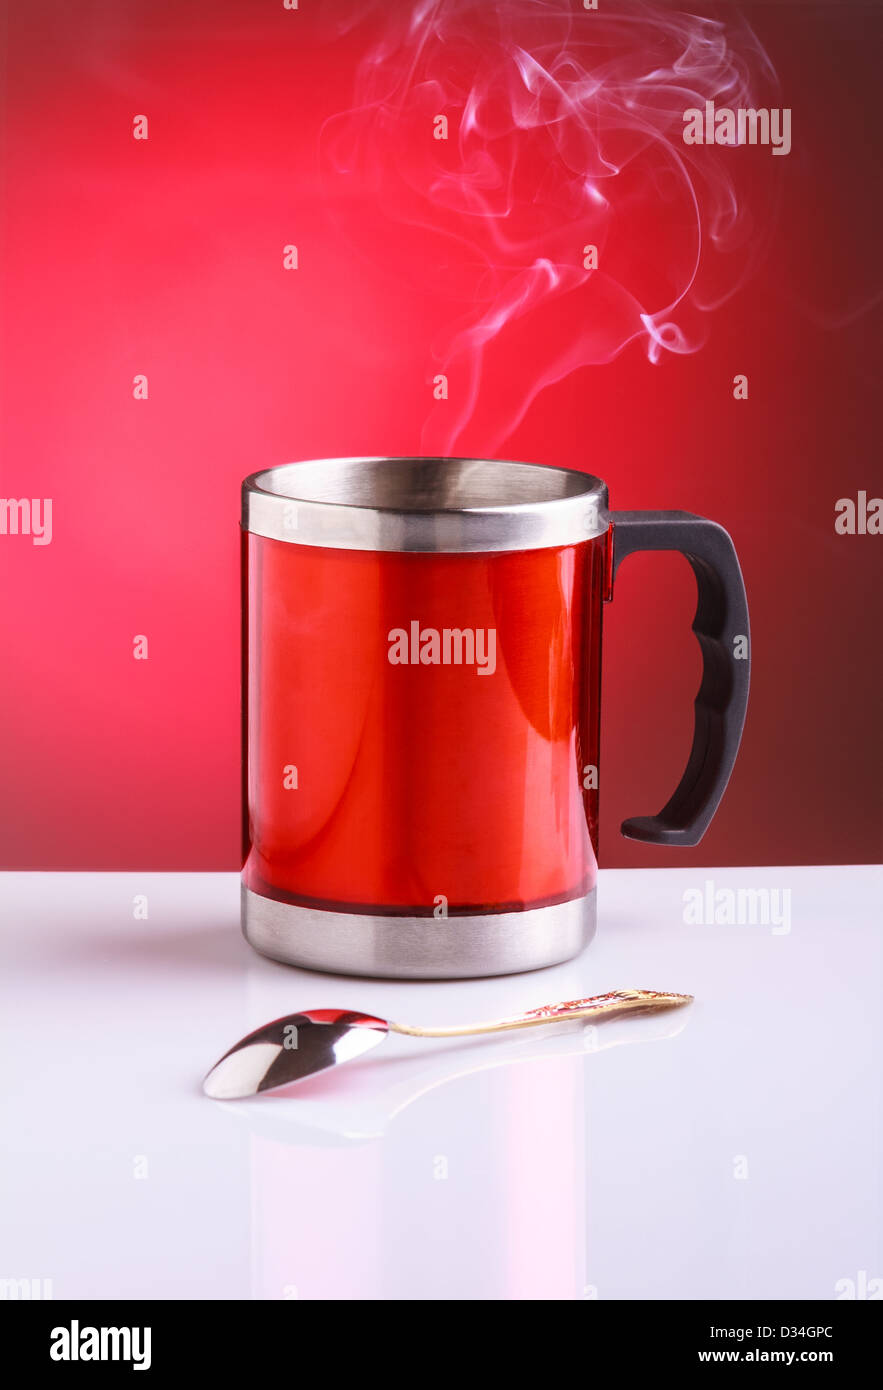 https://c8.alamy.com/comp/D34GPC/modern-red-travel-mug-with-hot-tea-and-spoon-D34GPC.jpg